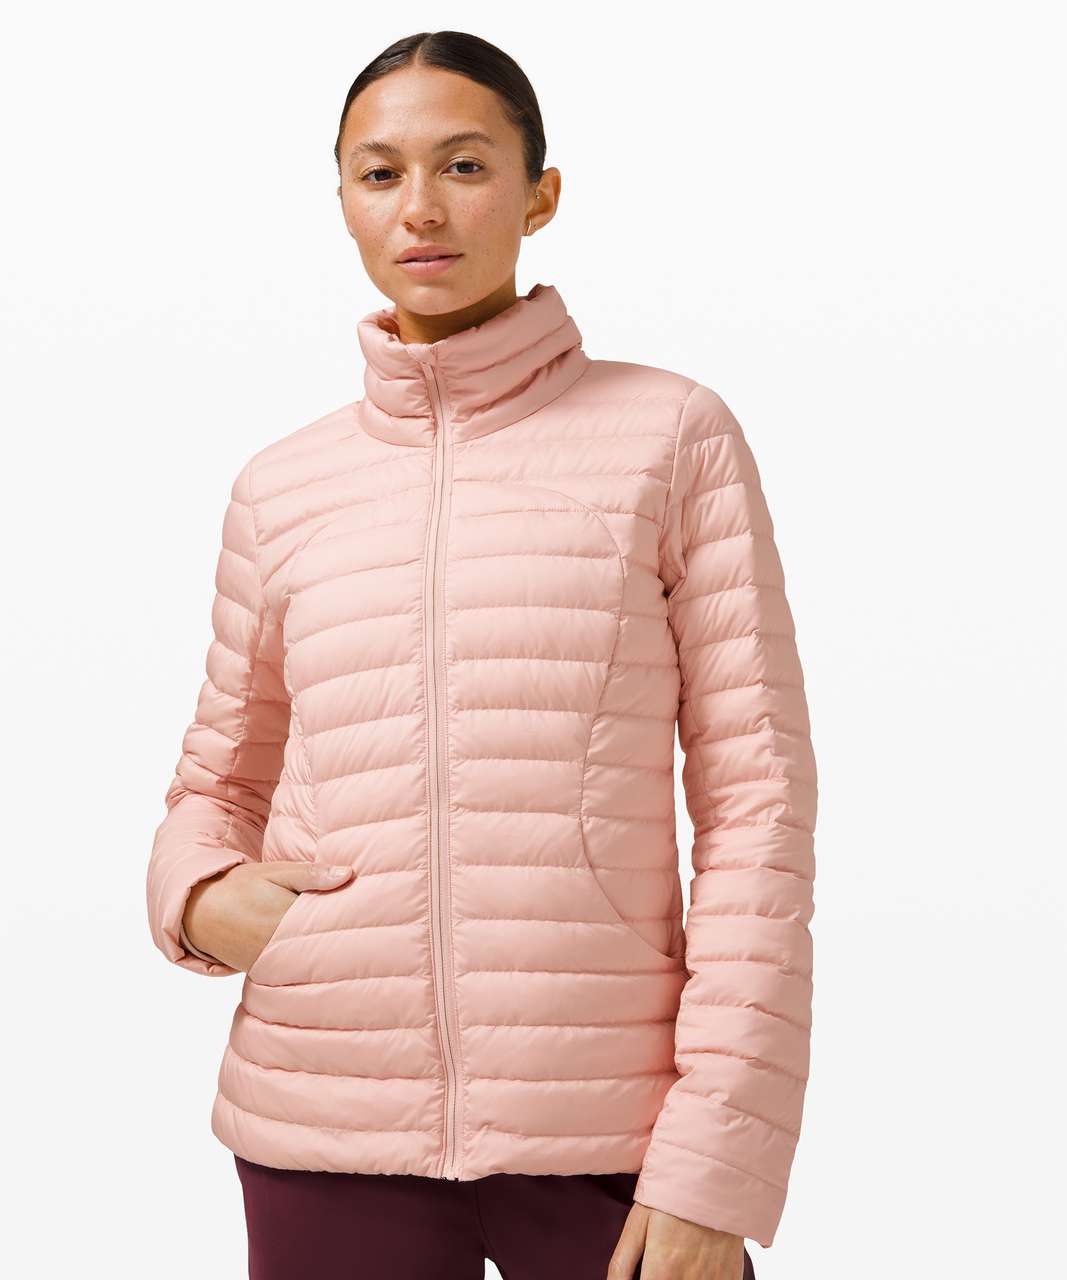 Lululemon Down For It All Jacket Full Zip Hood Size 8 Pink Mist PIMI 26656